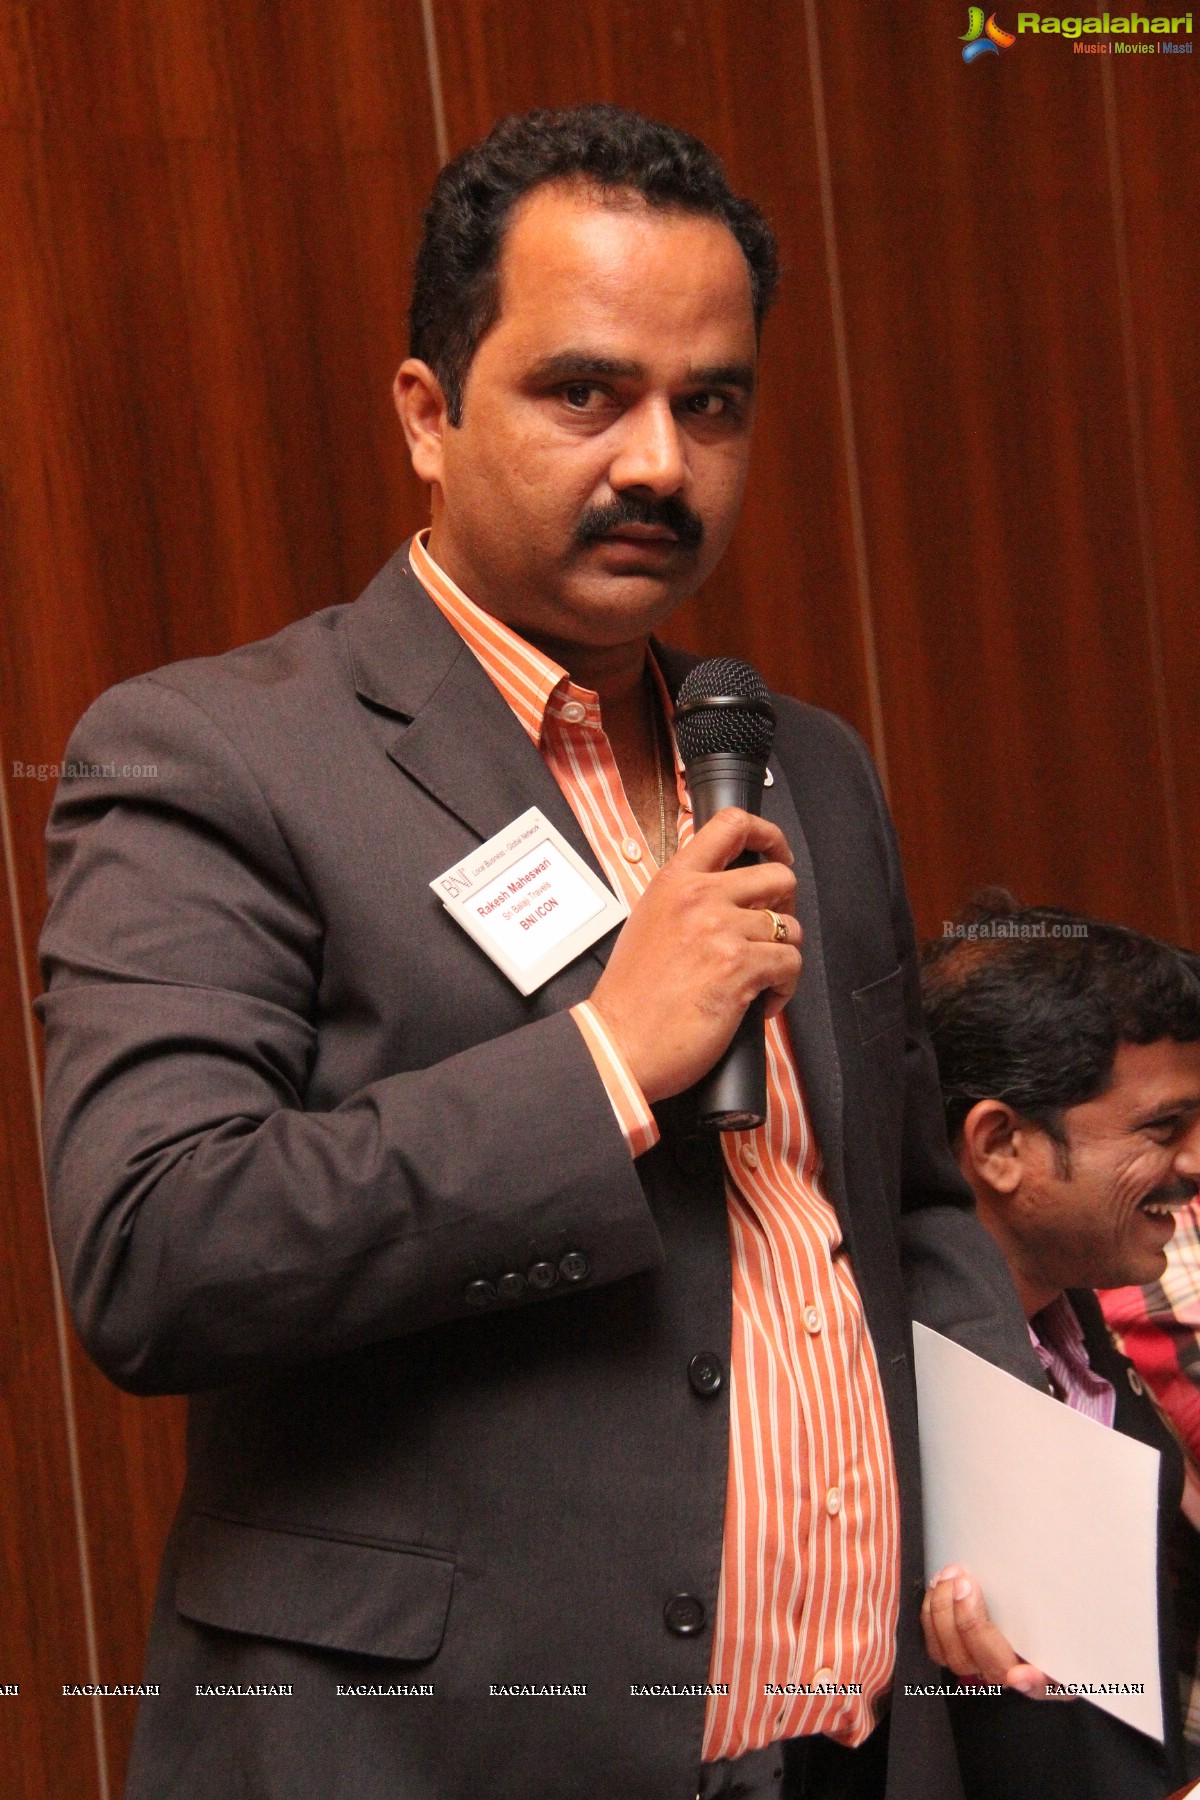 BNI India Icon Meet (June 3, 2014) at Radisson Blu Plaza, Hyderabad